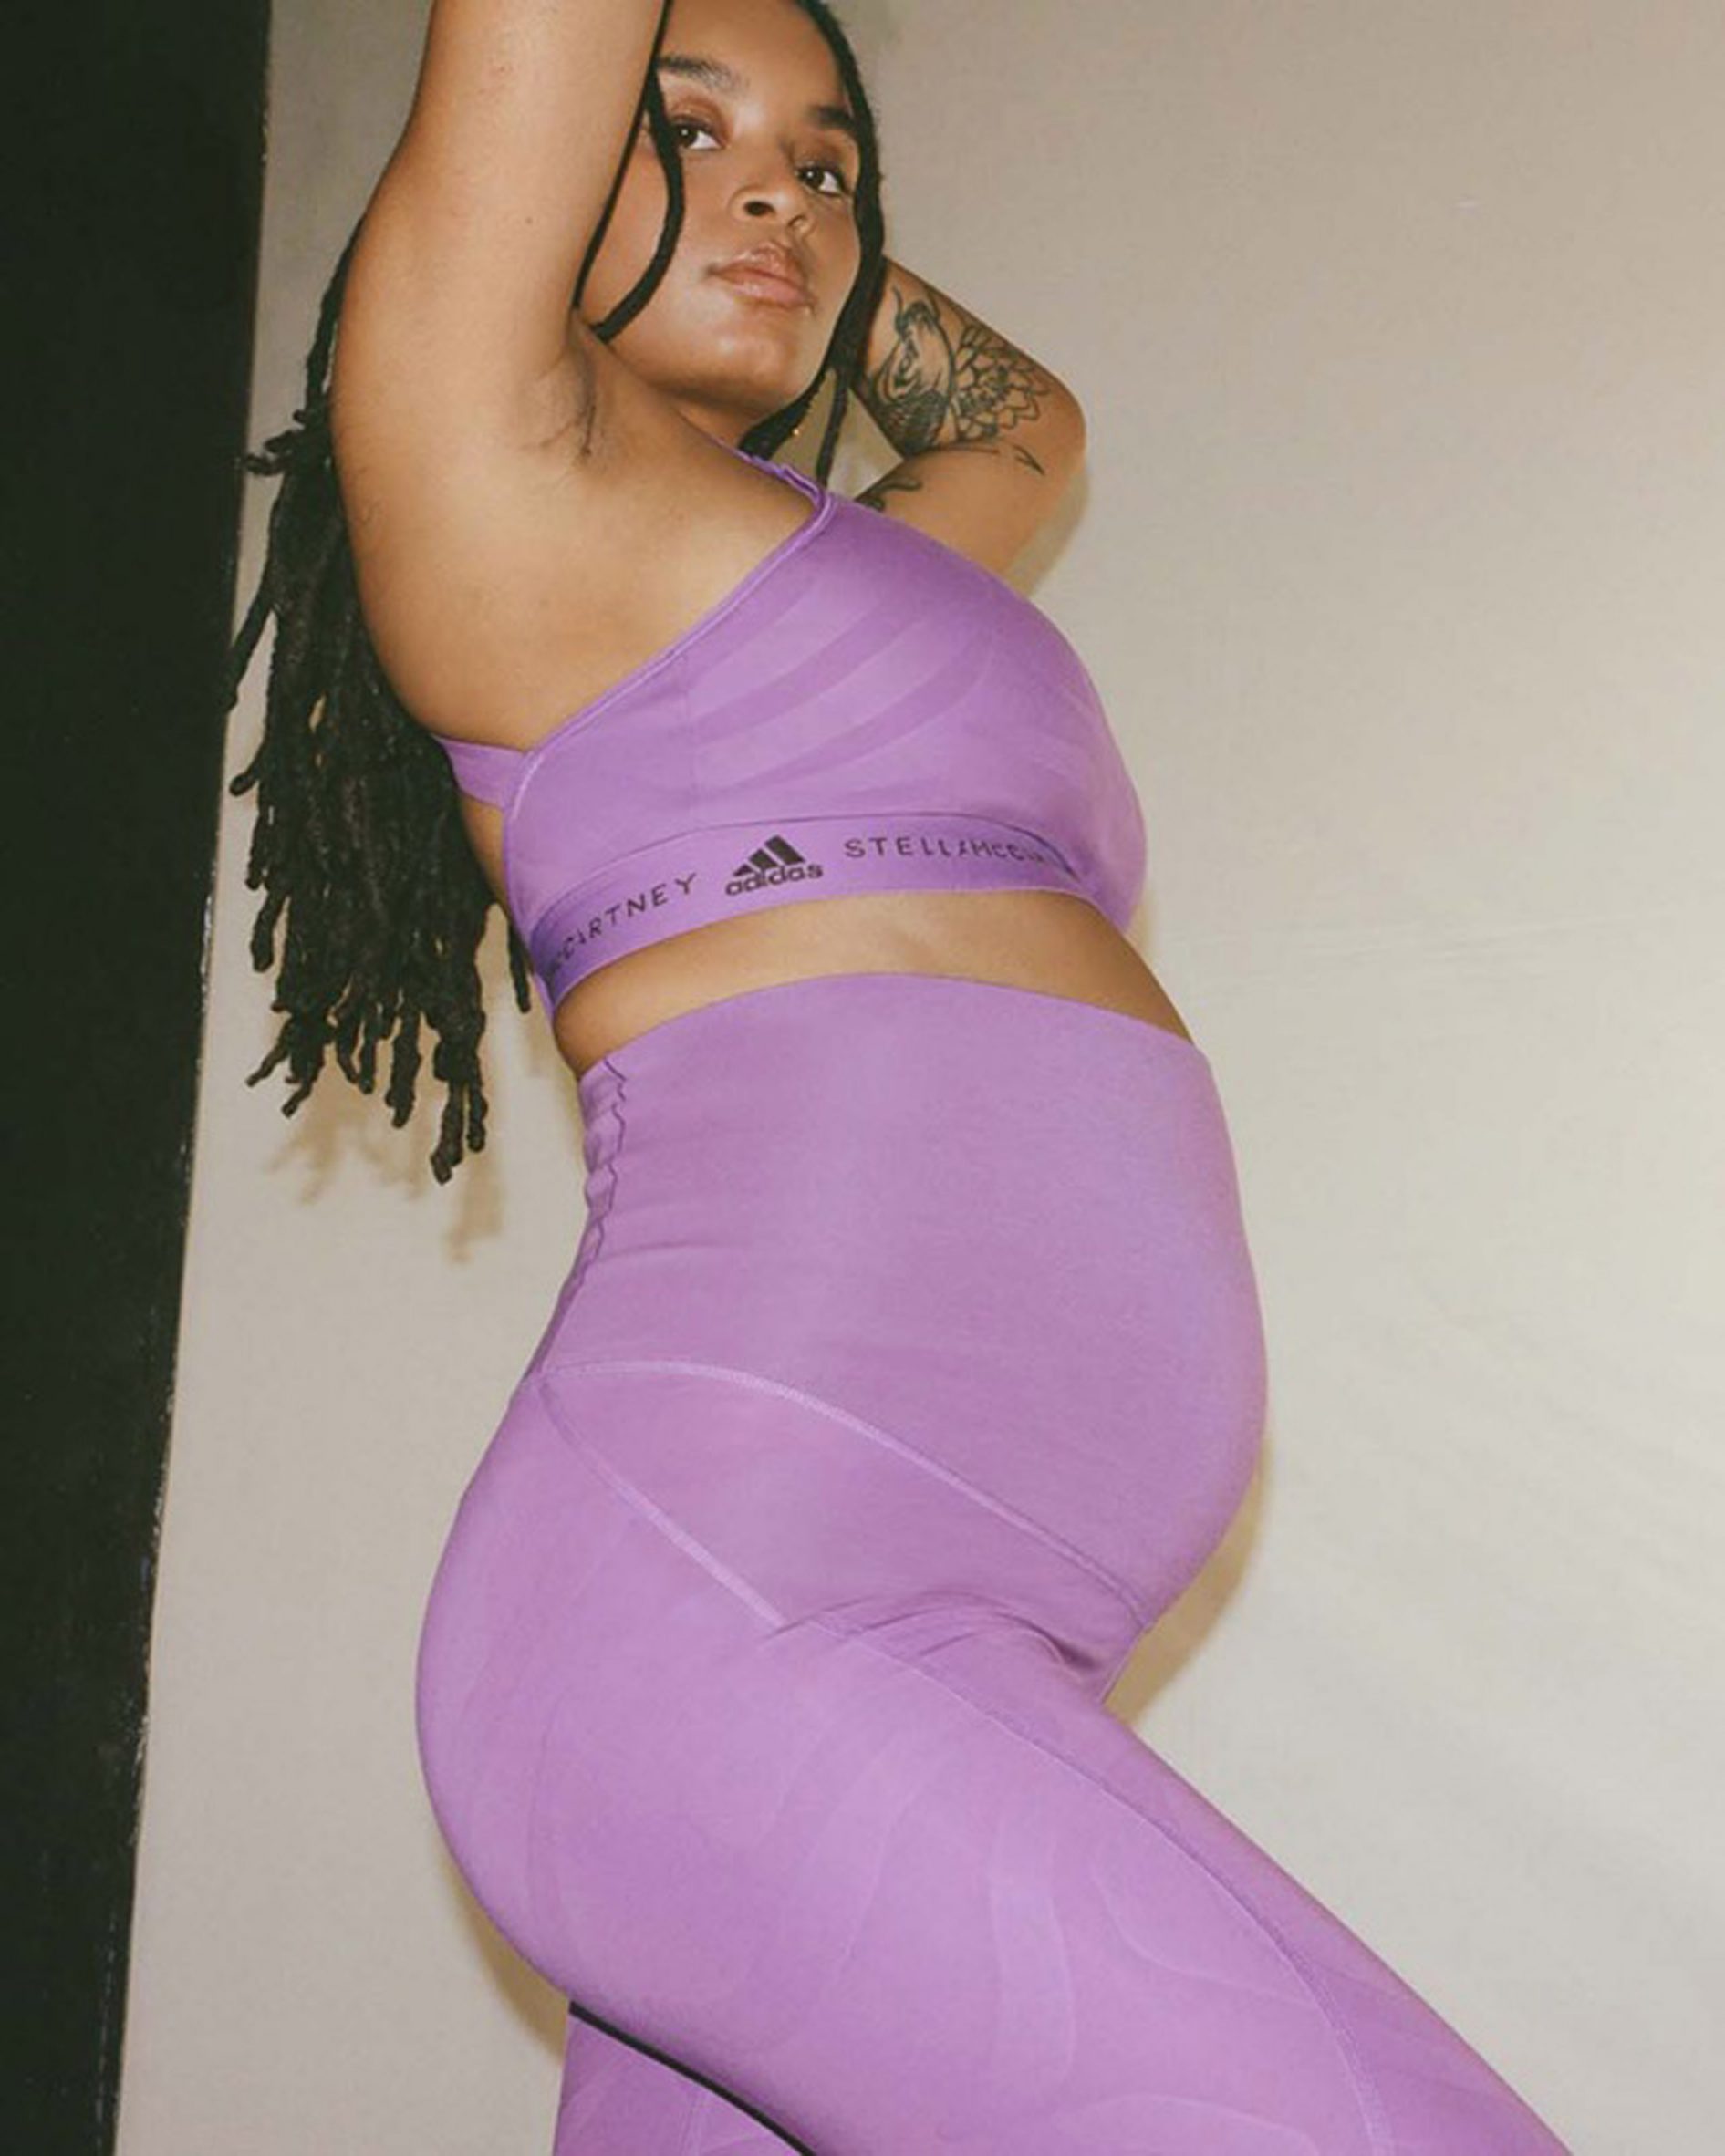 A woman wearing purple leggings and nursing sports bra